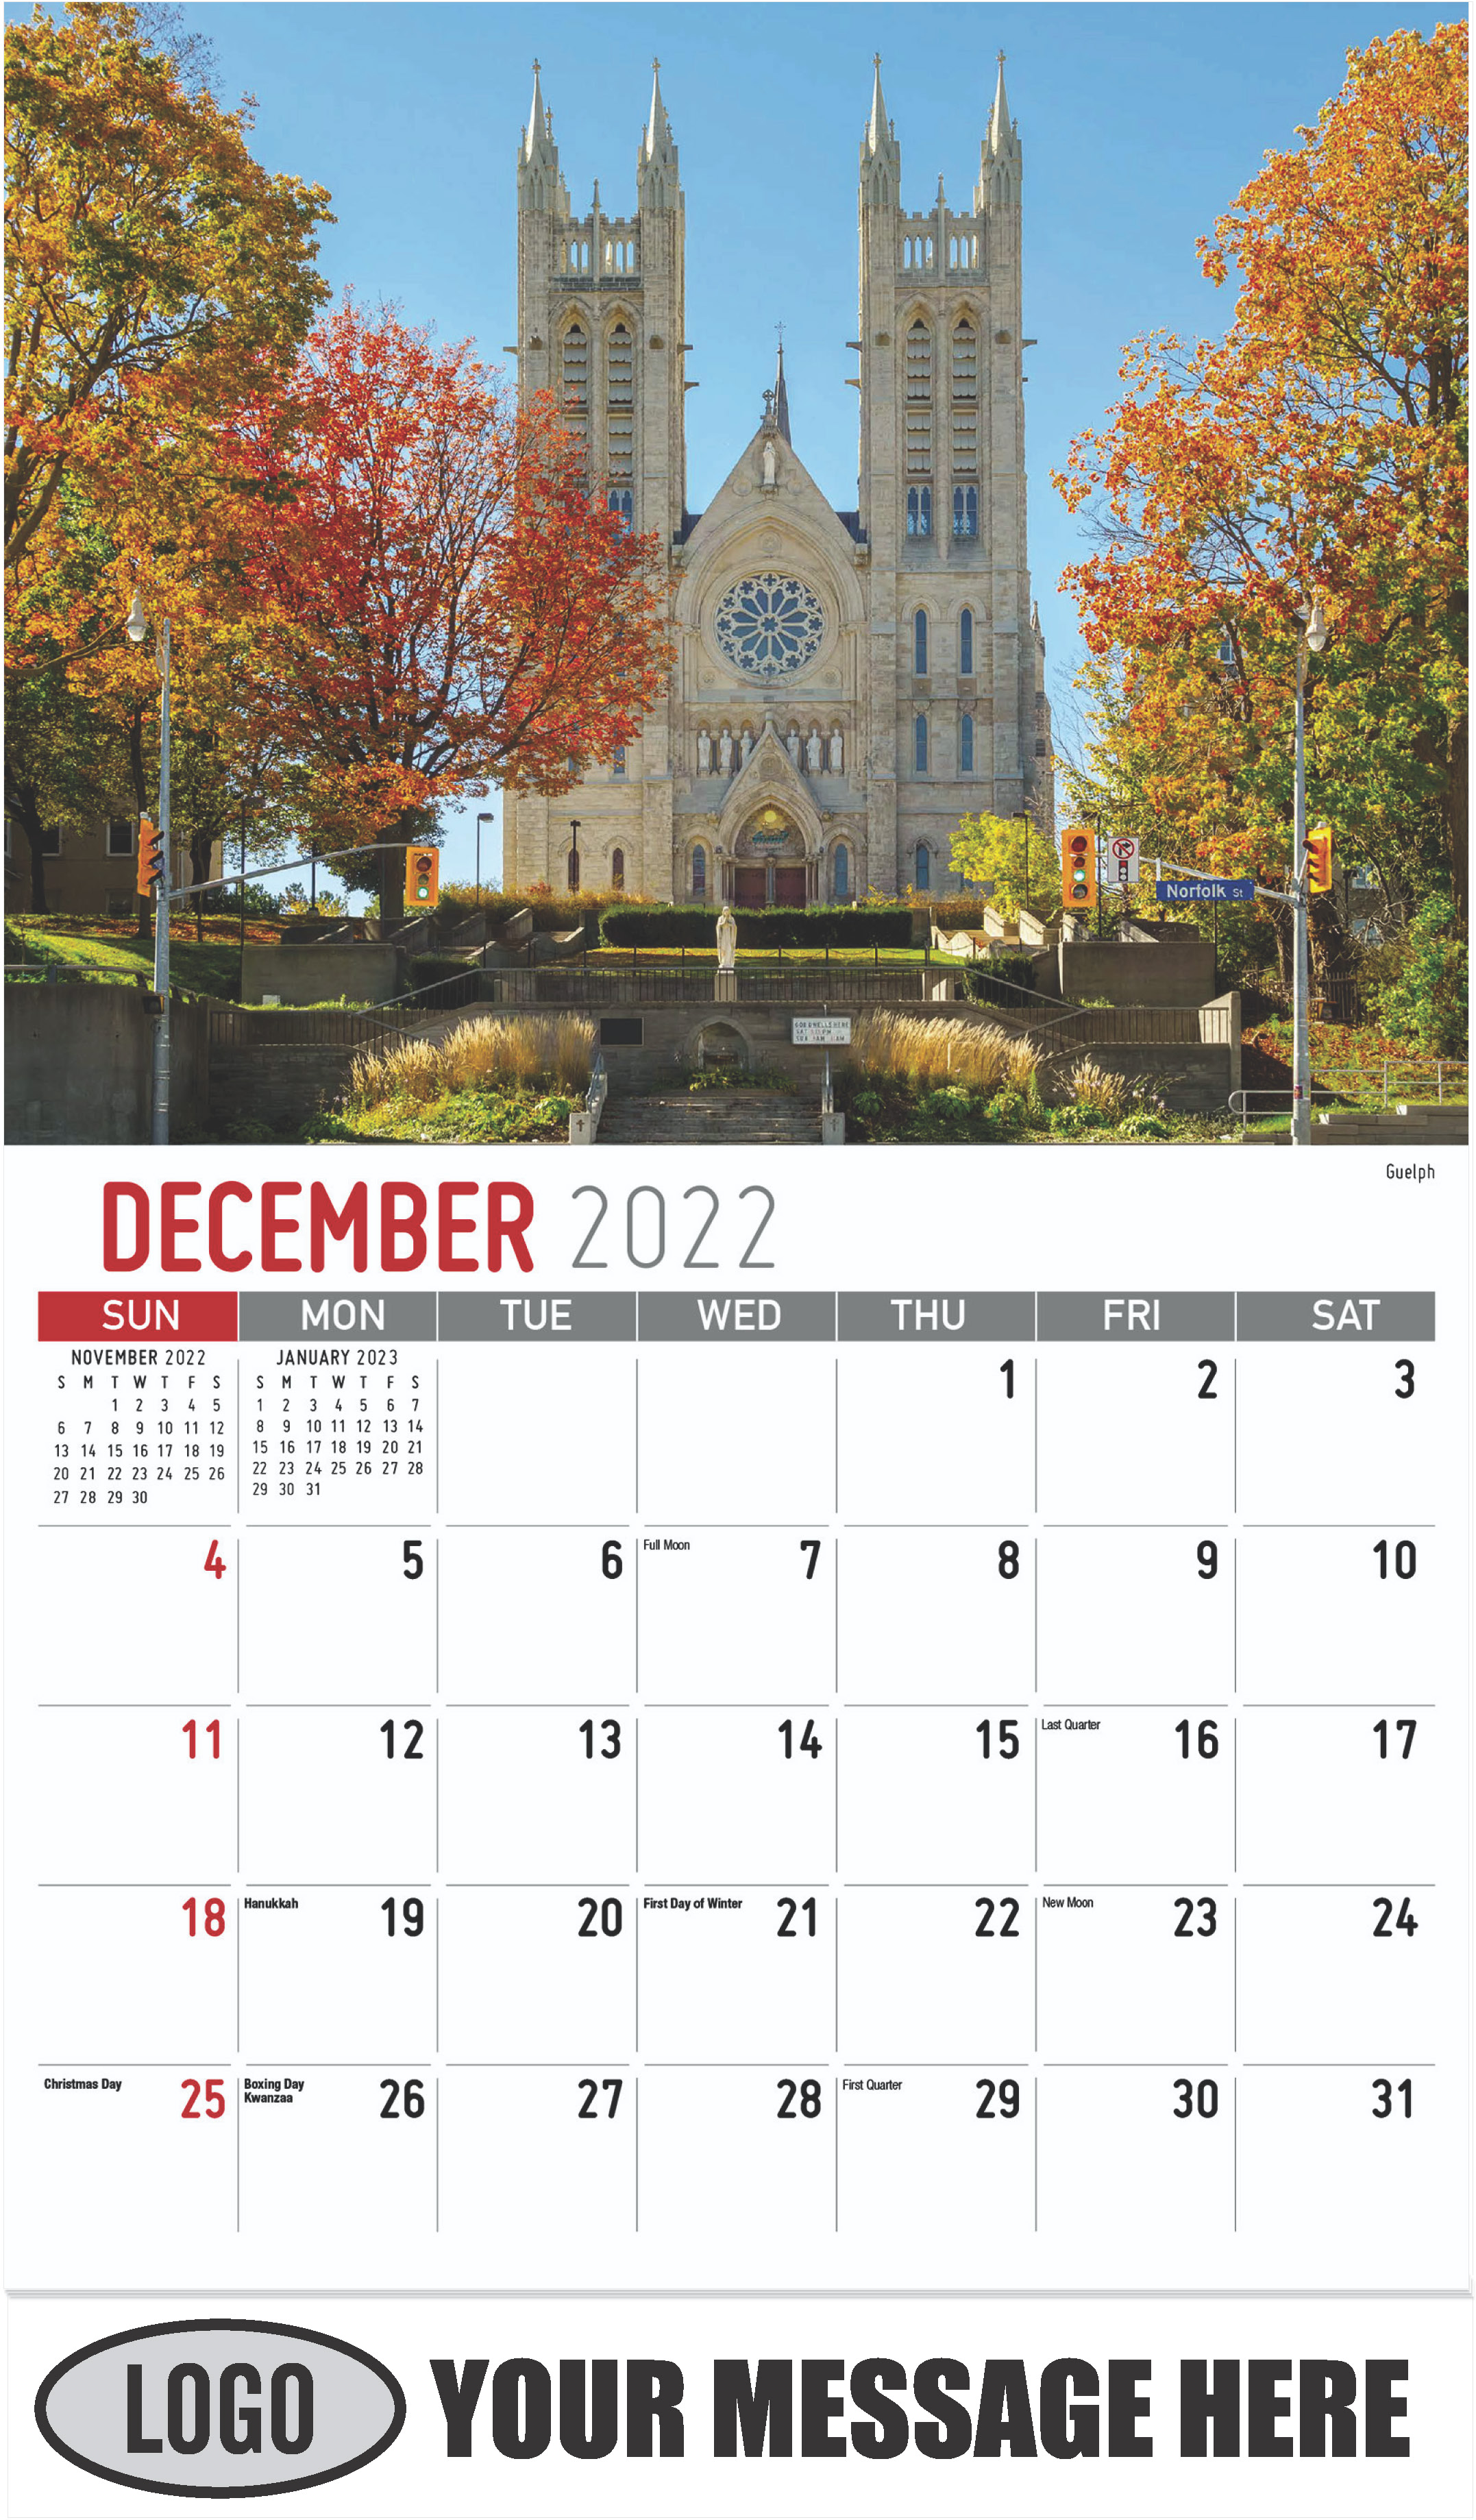 Guelph - December 2022 - Scenes of Ontario 2023 Promotional Calendar